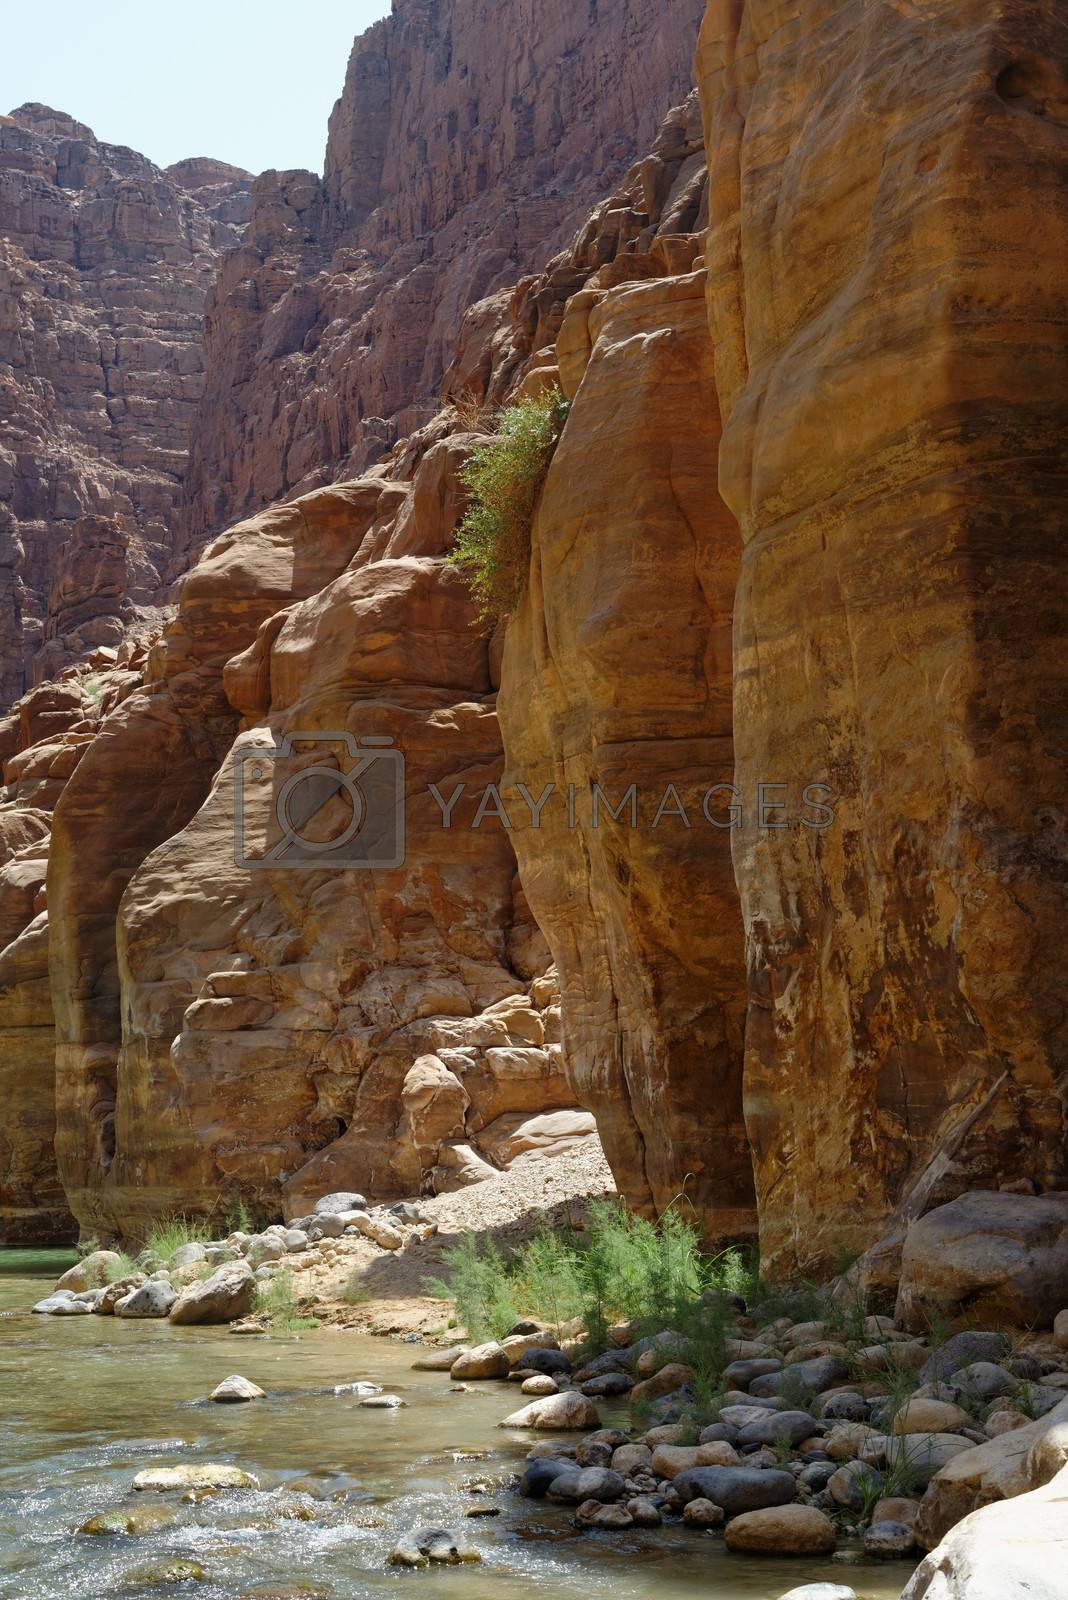 Royalty free image of Scenic cliffs of Wadi Mujib creek in Jordan by slavapolo